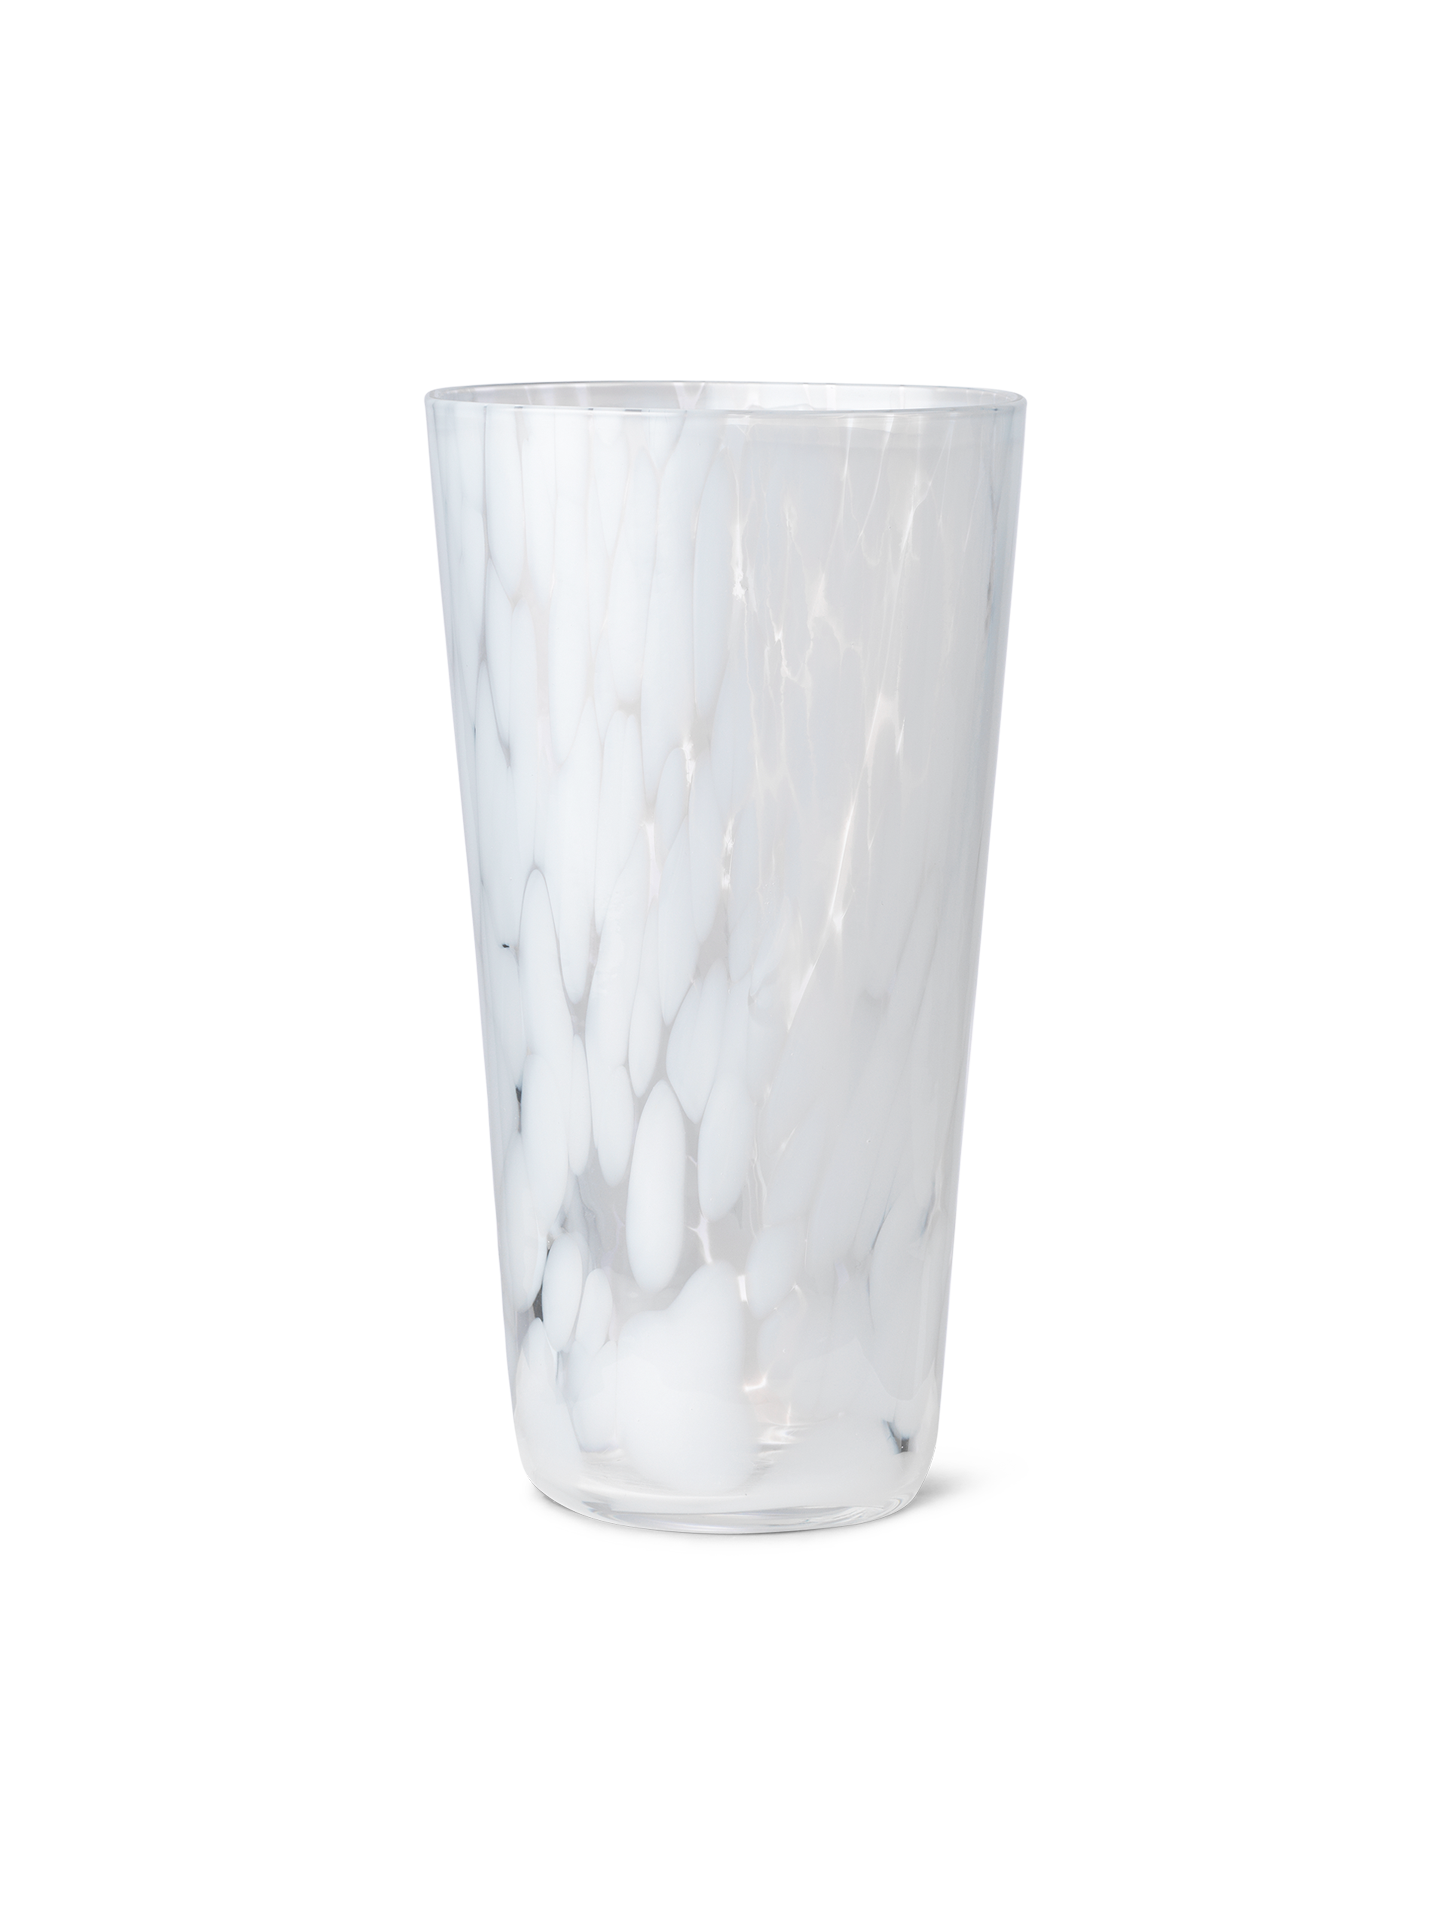 Casca Vase - Milk